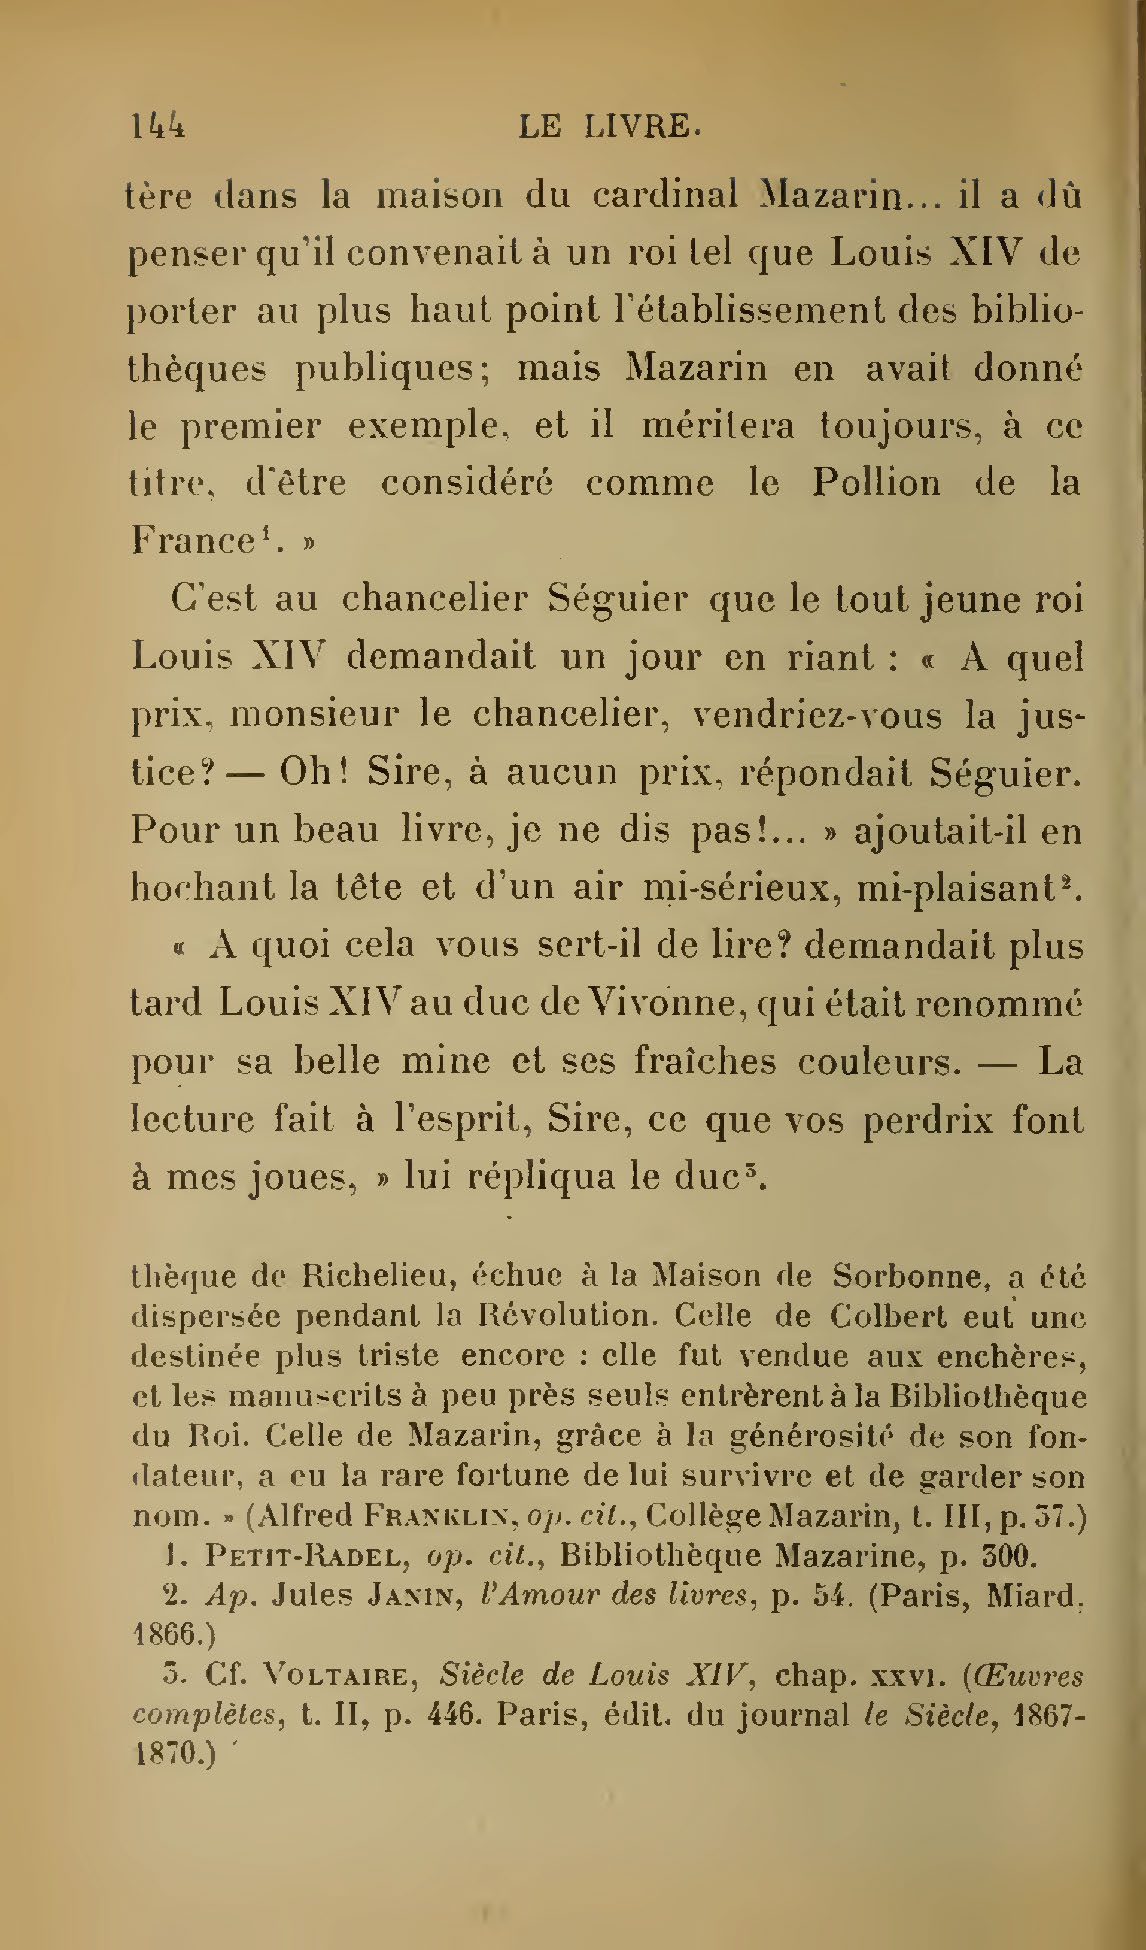 Albert Cim, Le Livre, t. I, p. 144.